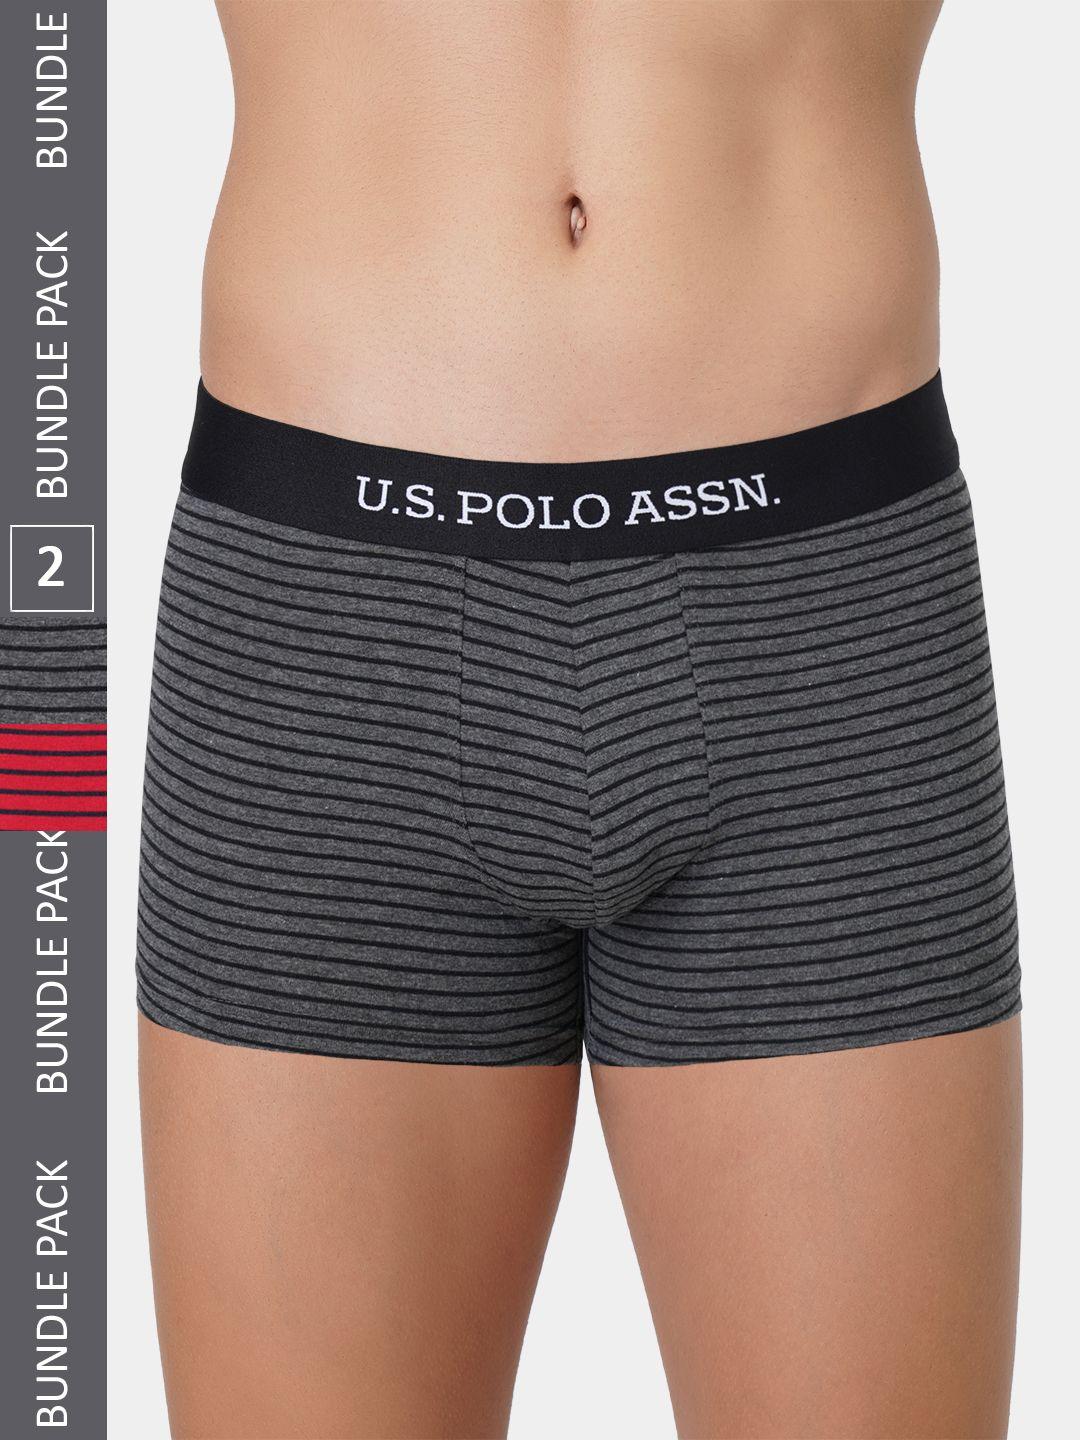 u.s.-polo-assn.-men-pack-of-2-striped-cotton-trunks-et005-gr1-p2